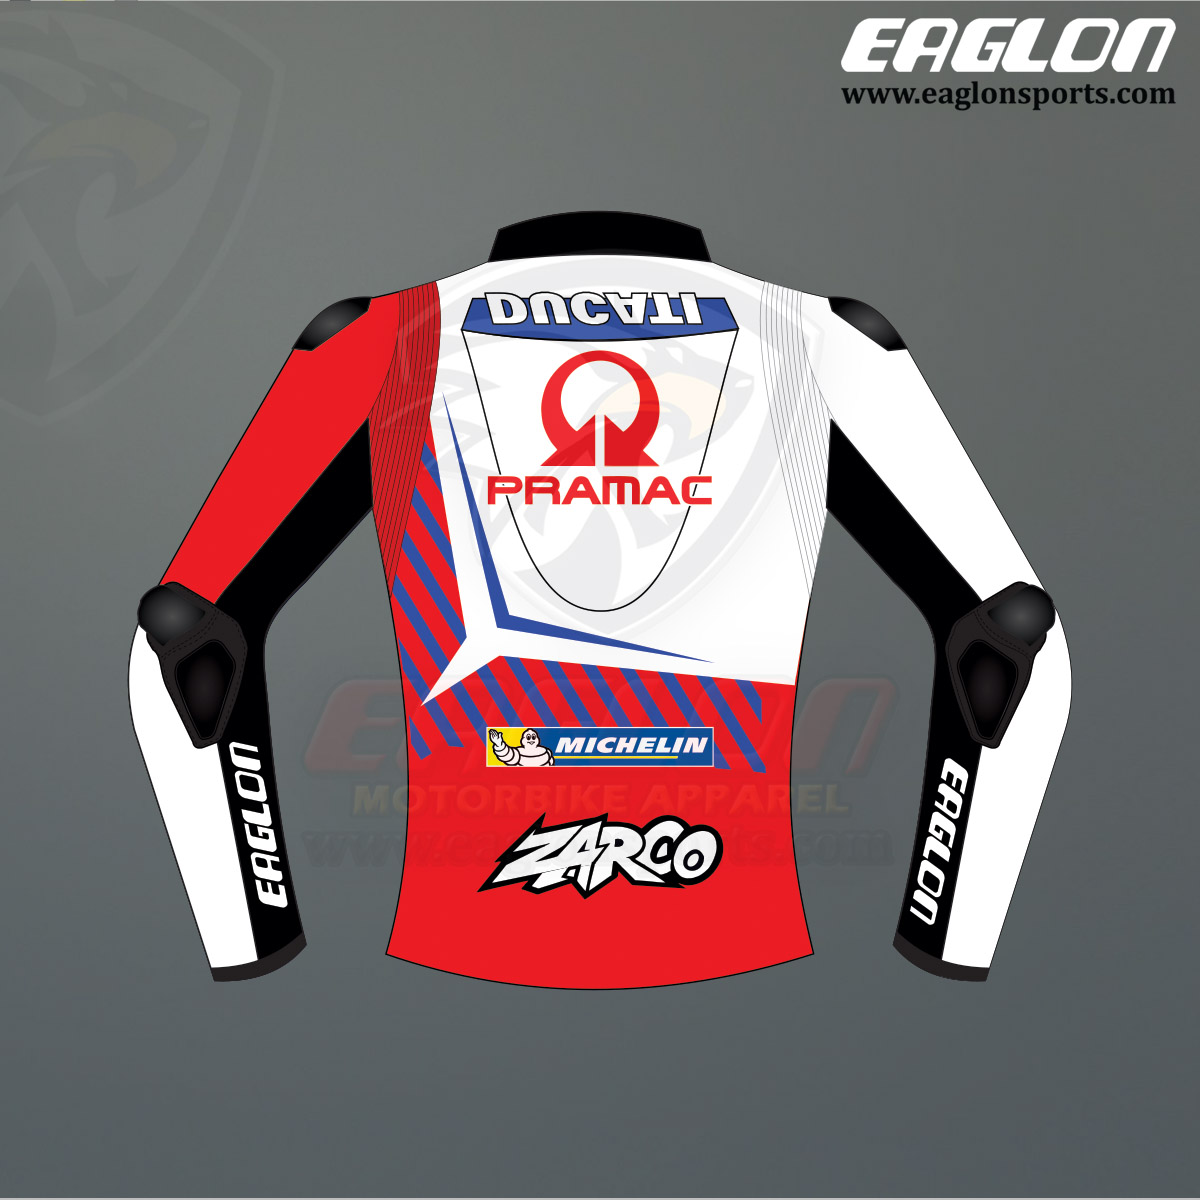 Johann-Zarco-Ducati-Paramac-MotoGP-2021-Leather-Riding-Jacket